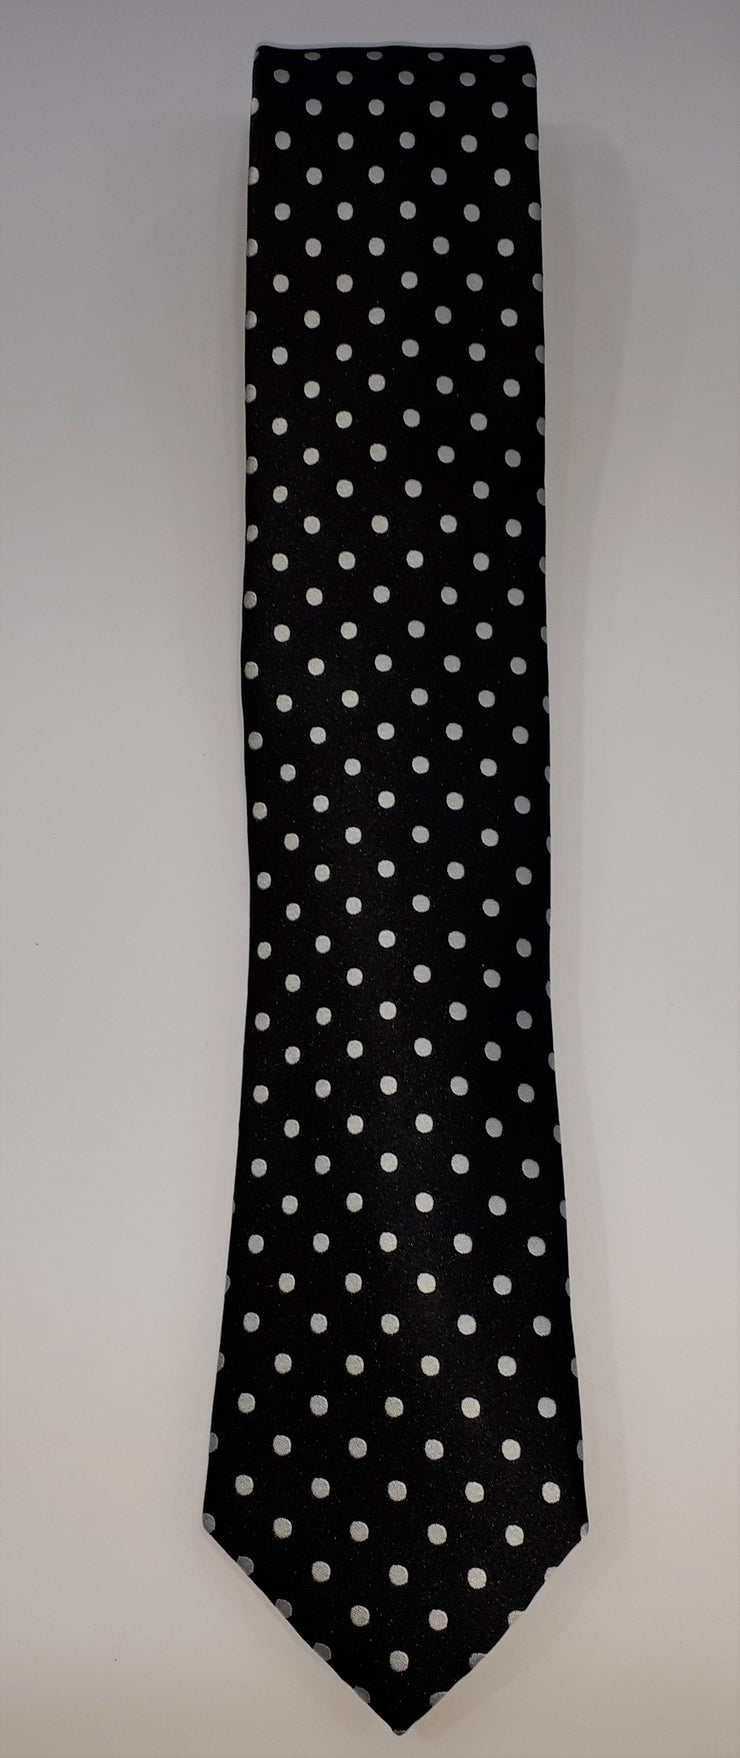 formalaties tie polka dot black & white